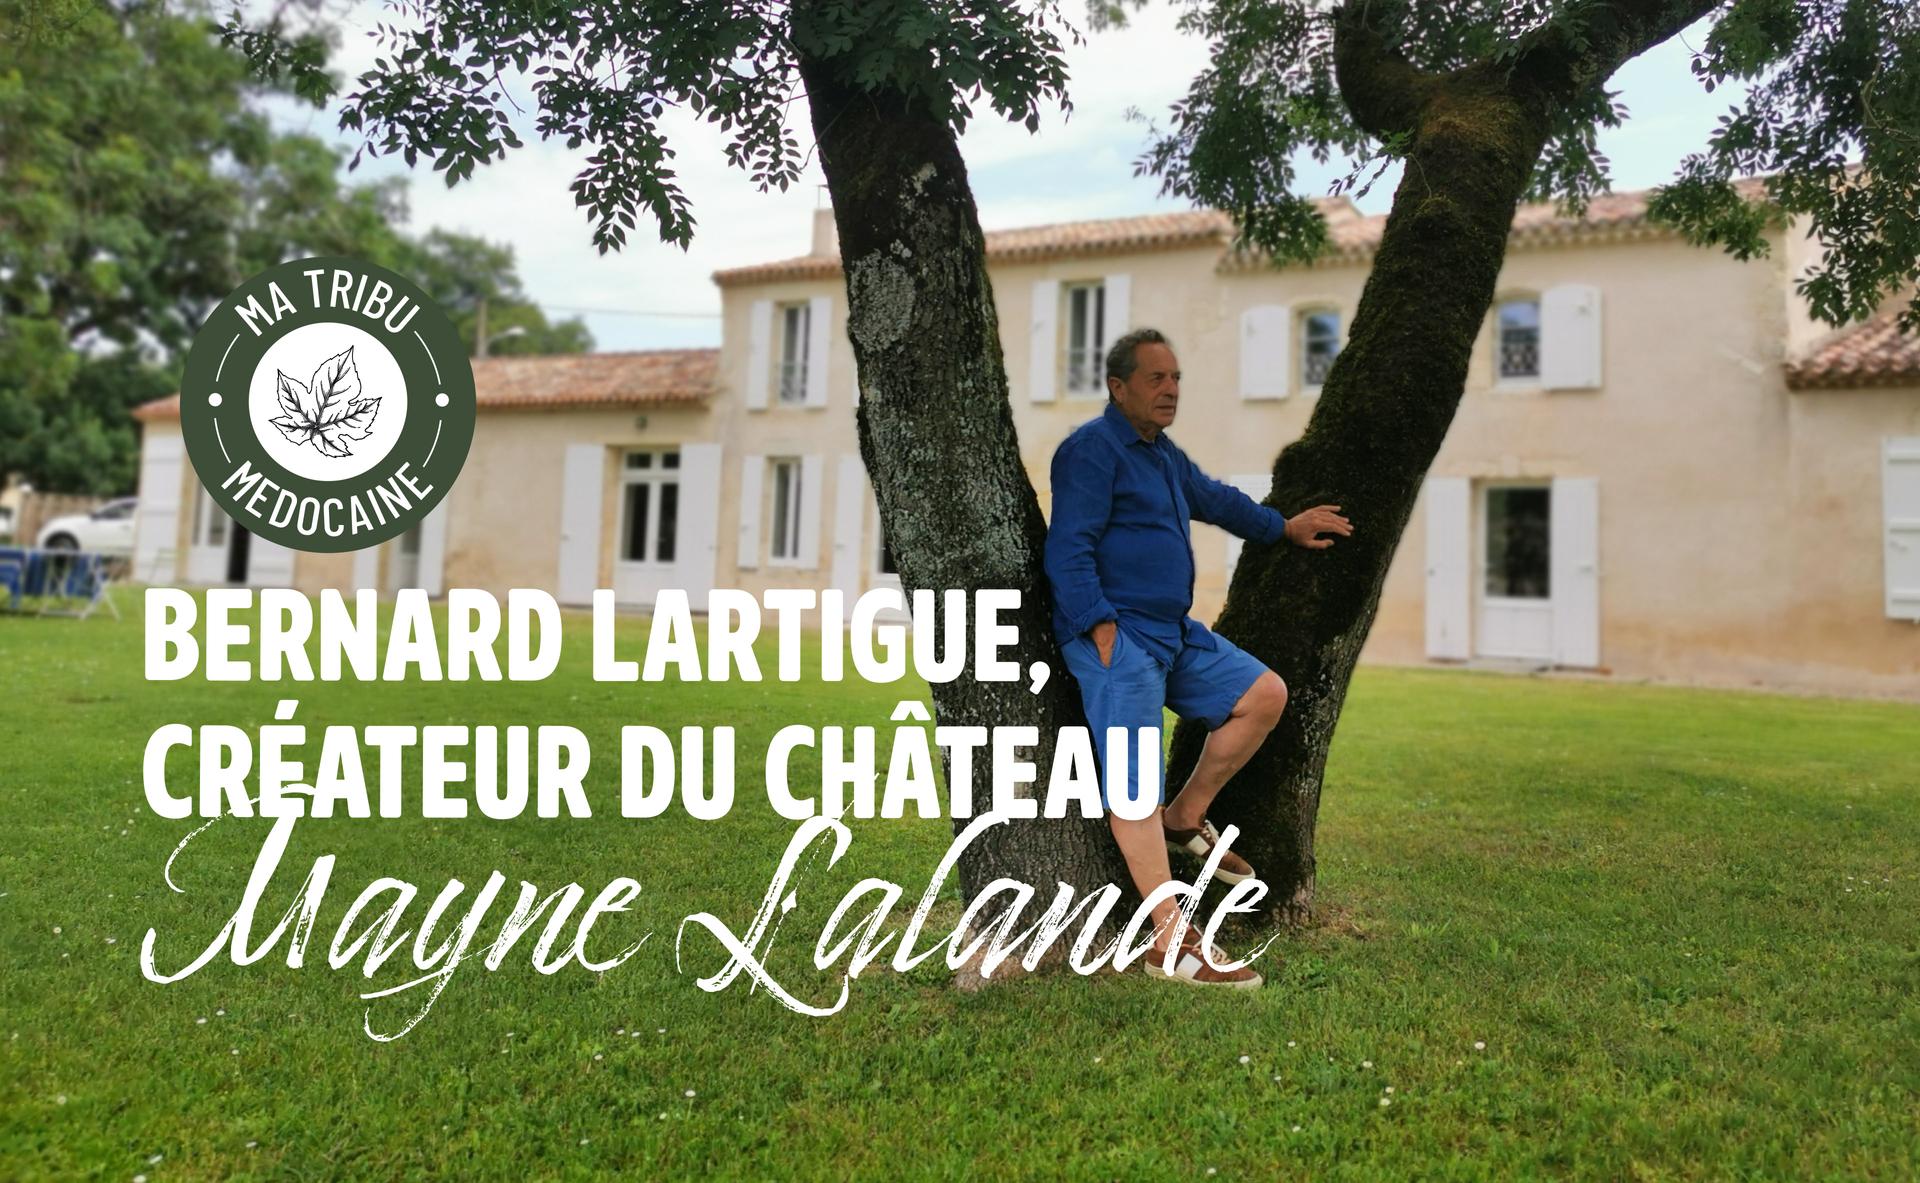 Ma tribu médocaine : Bernard Lartigue, créateur du château Mayne Lalande